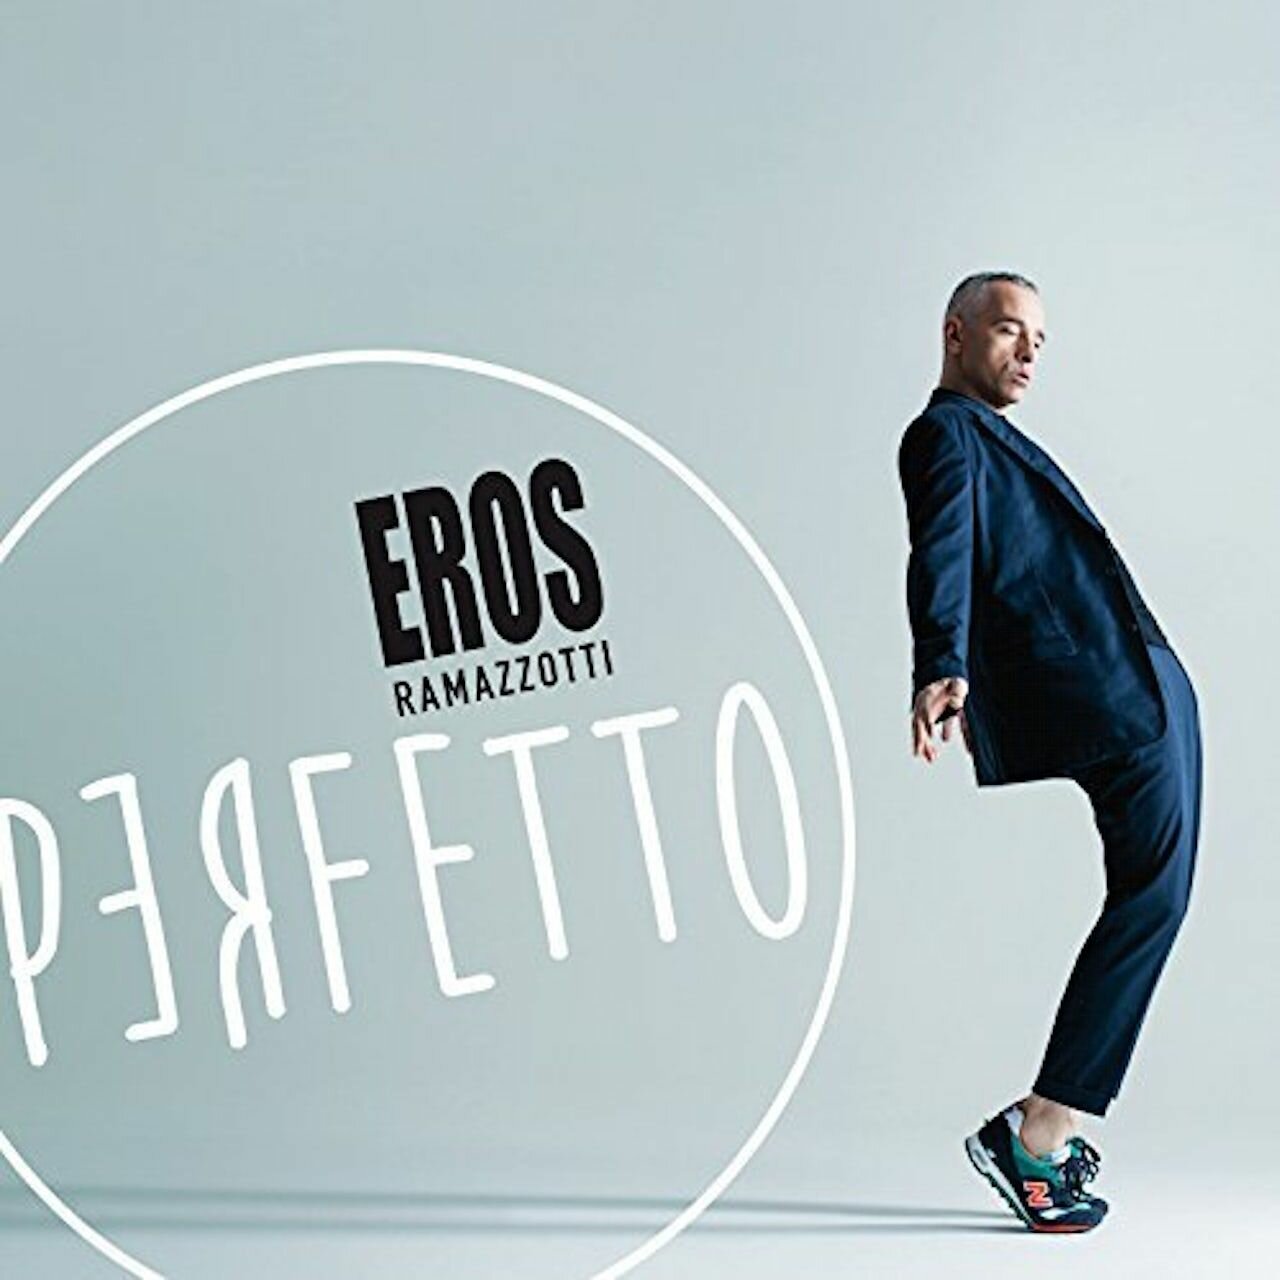 0602547515292, Виниловая пластинка Ramazzotti, Eros, Perfetto Universal Music - фото №1